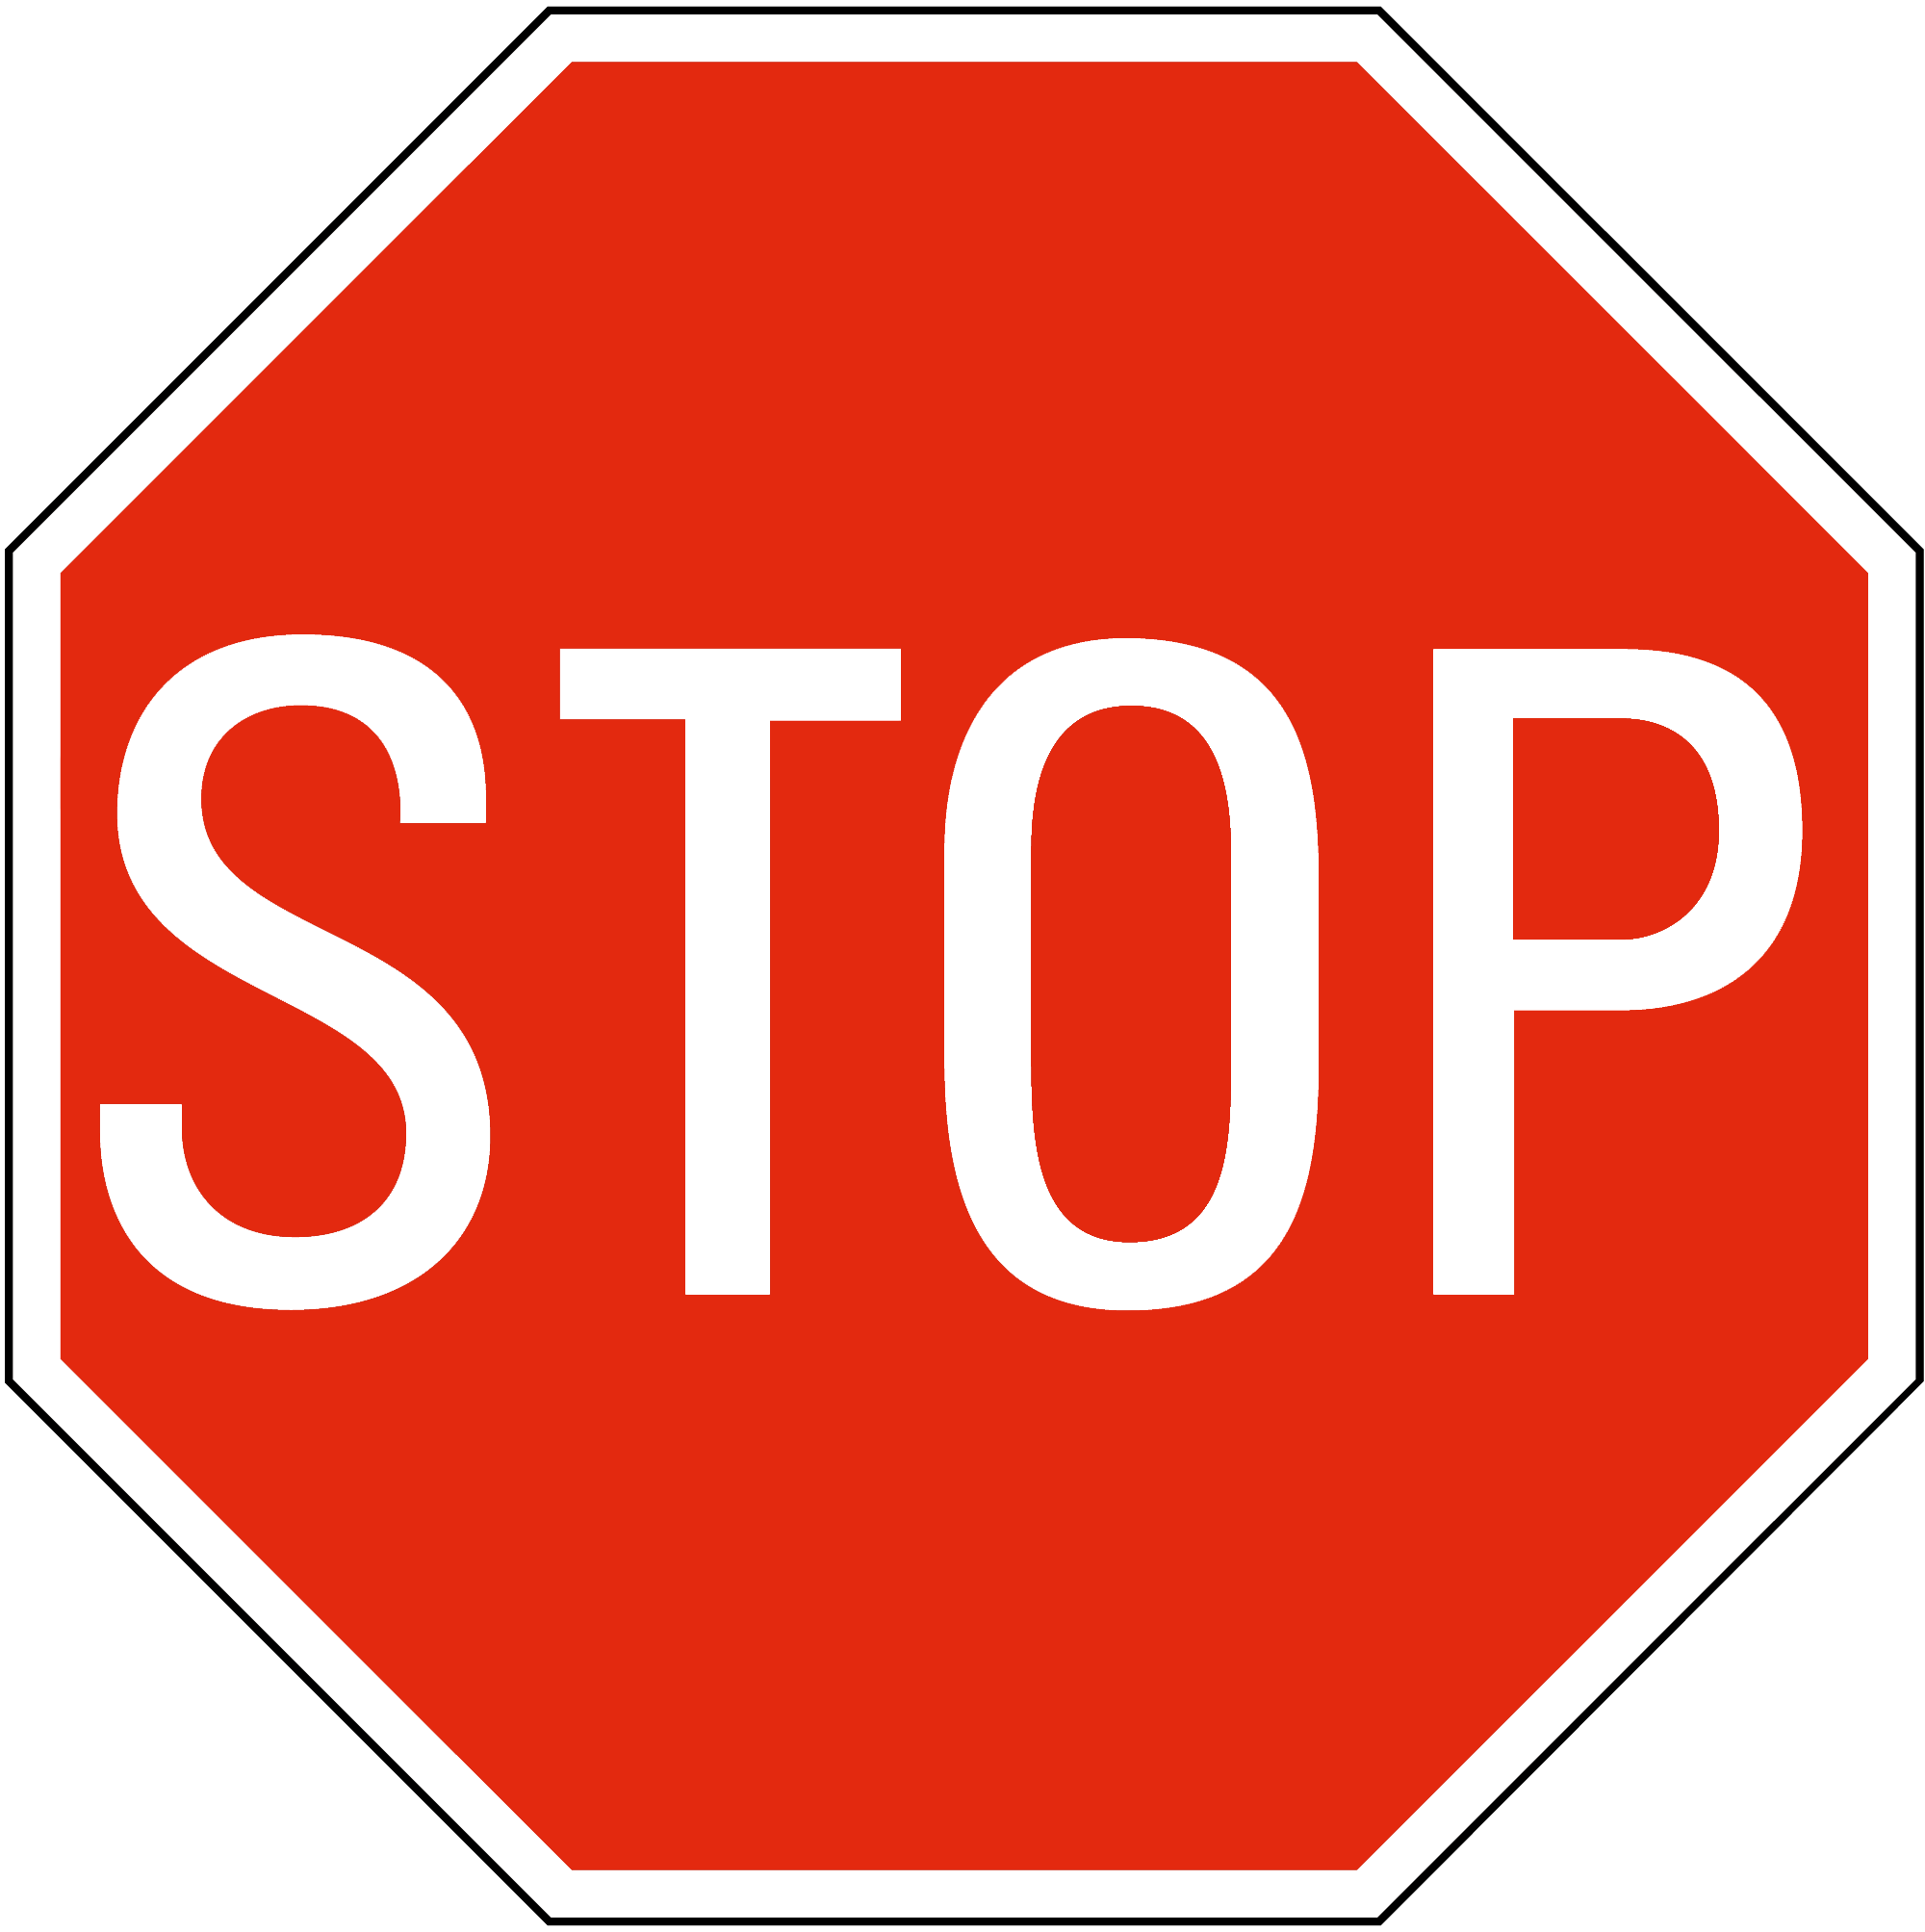 printable-stop-sign-image-printable-word-searches